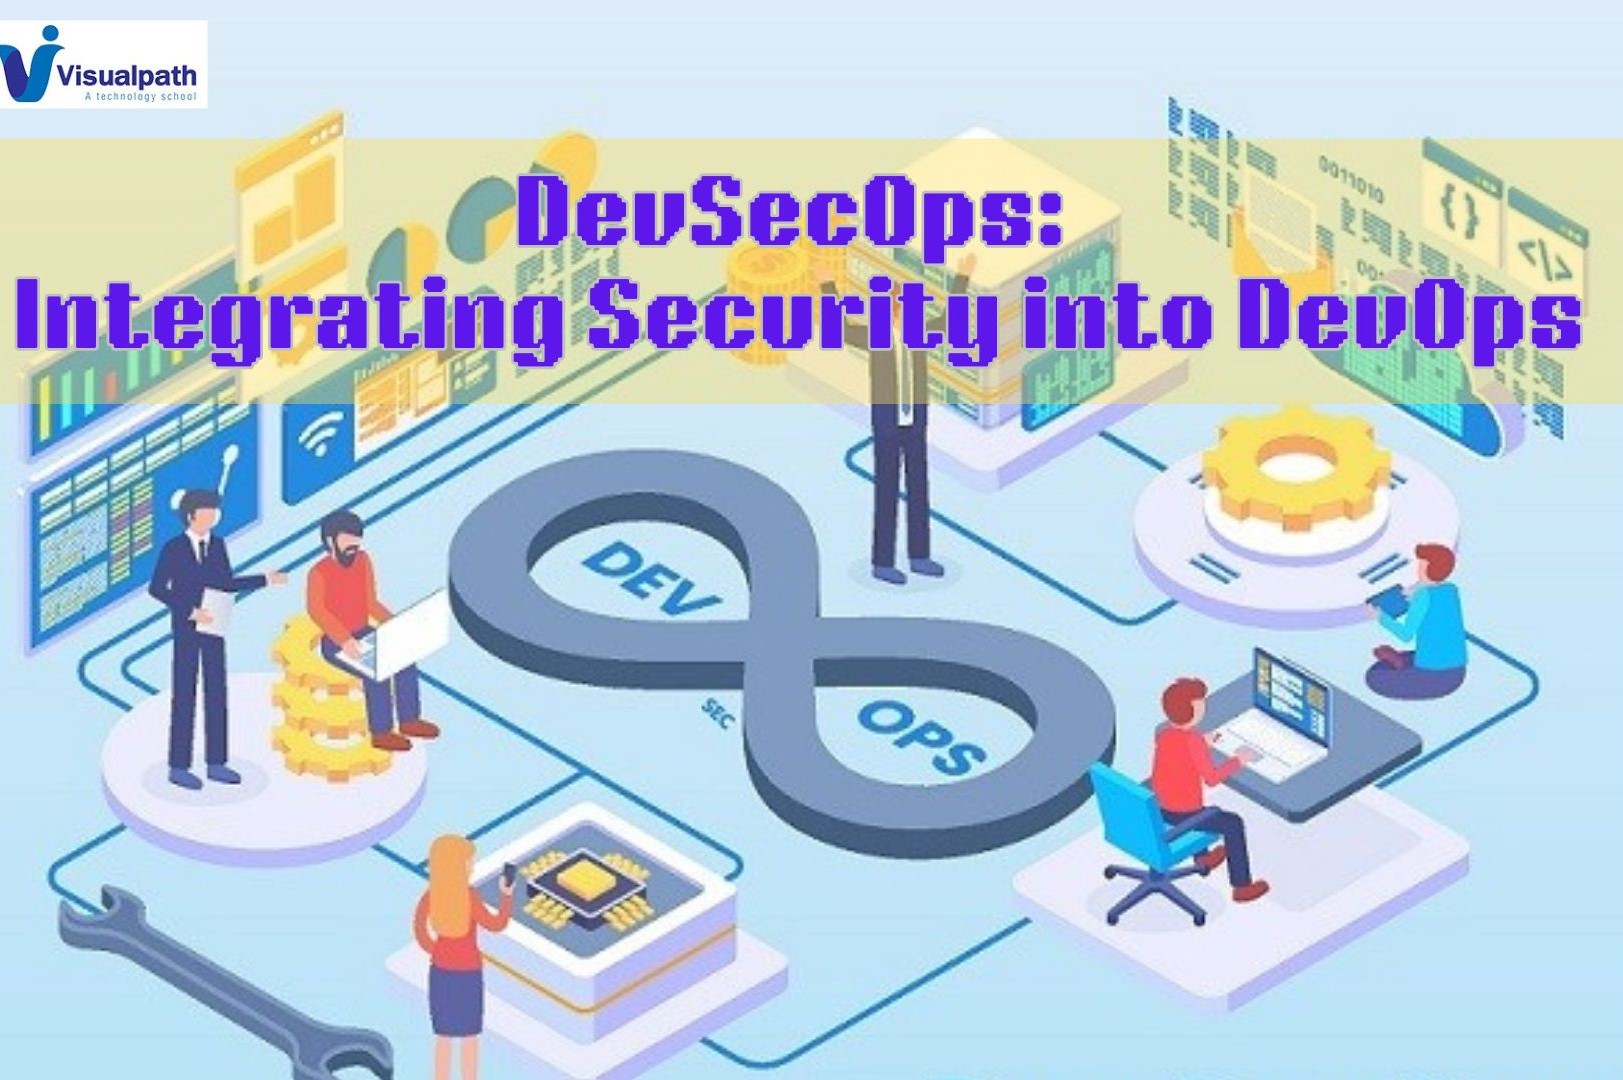 DevSecOps: Integrating Security into DevOps